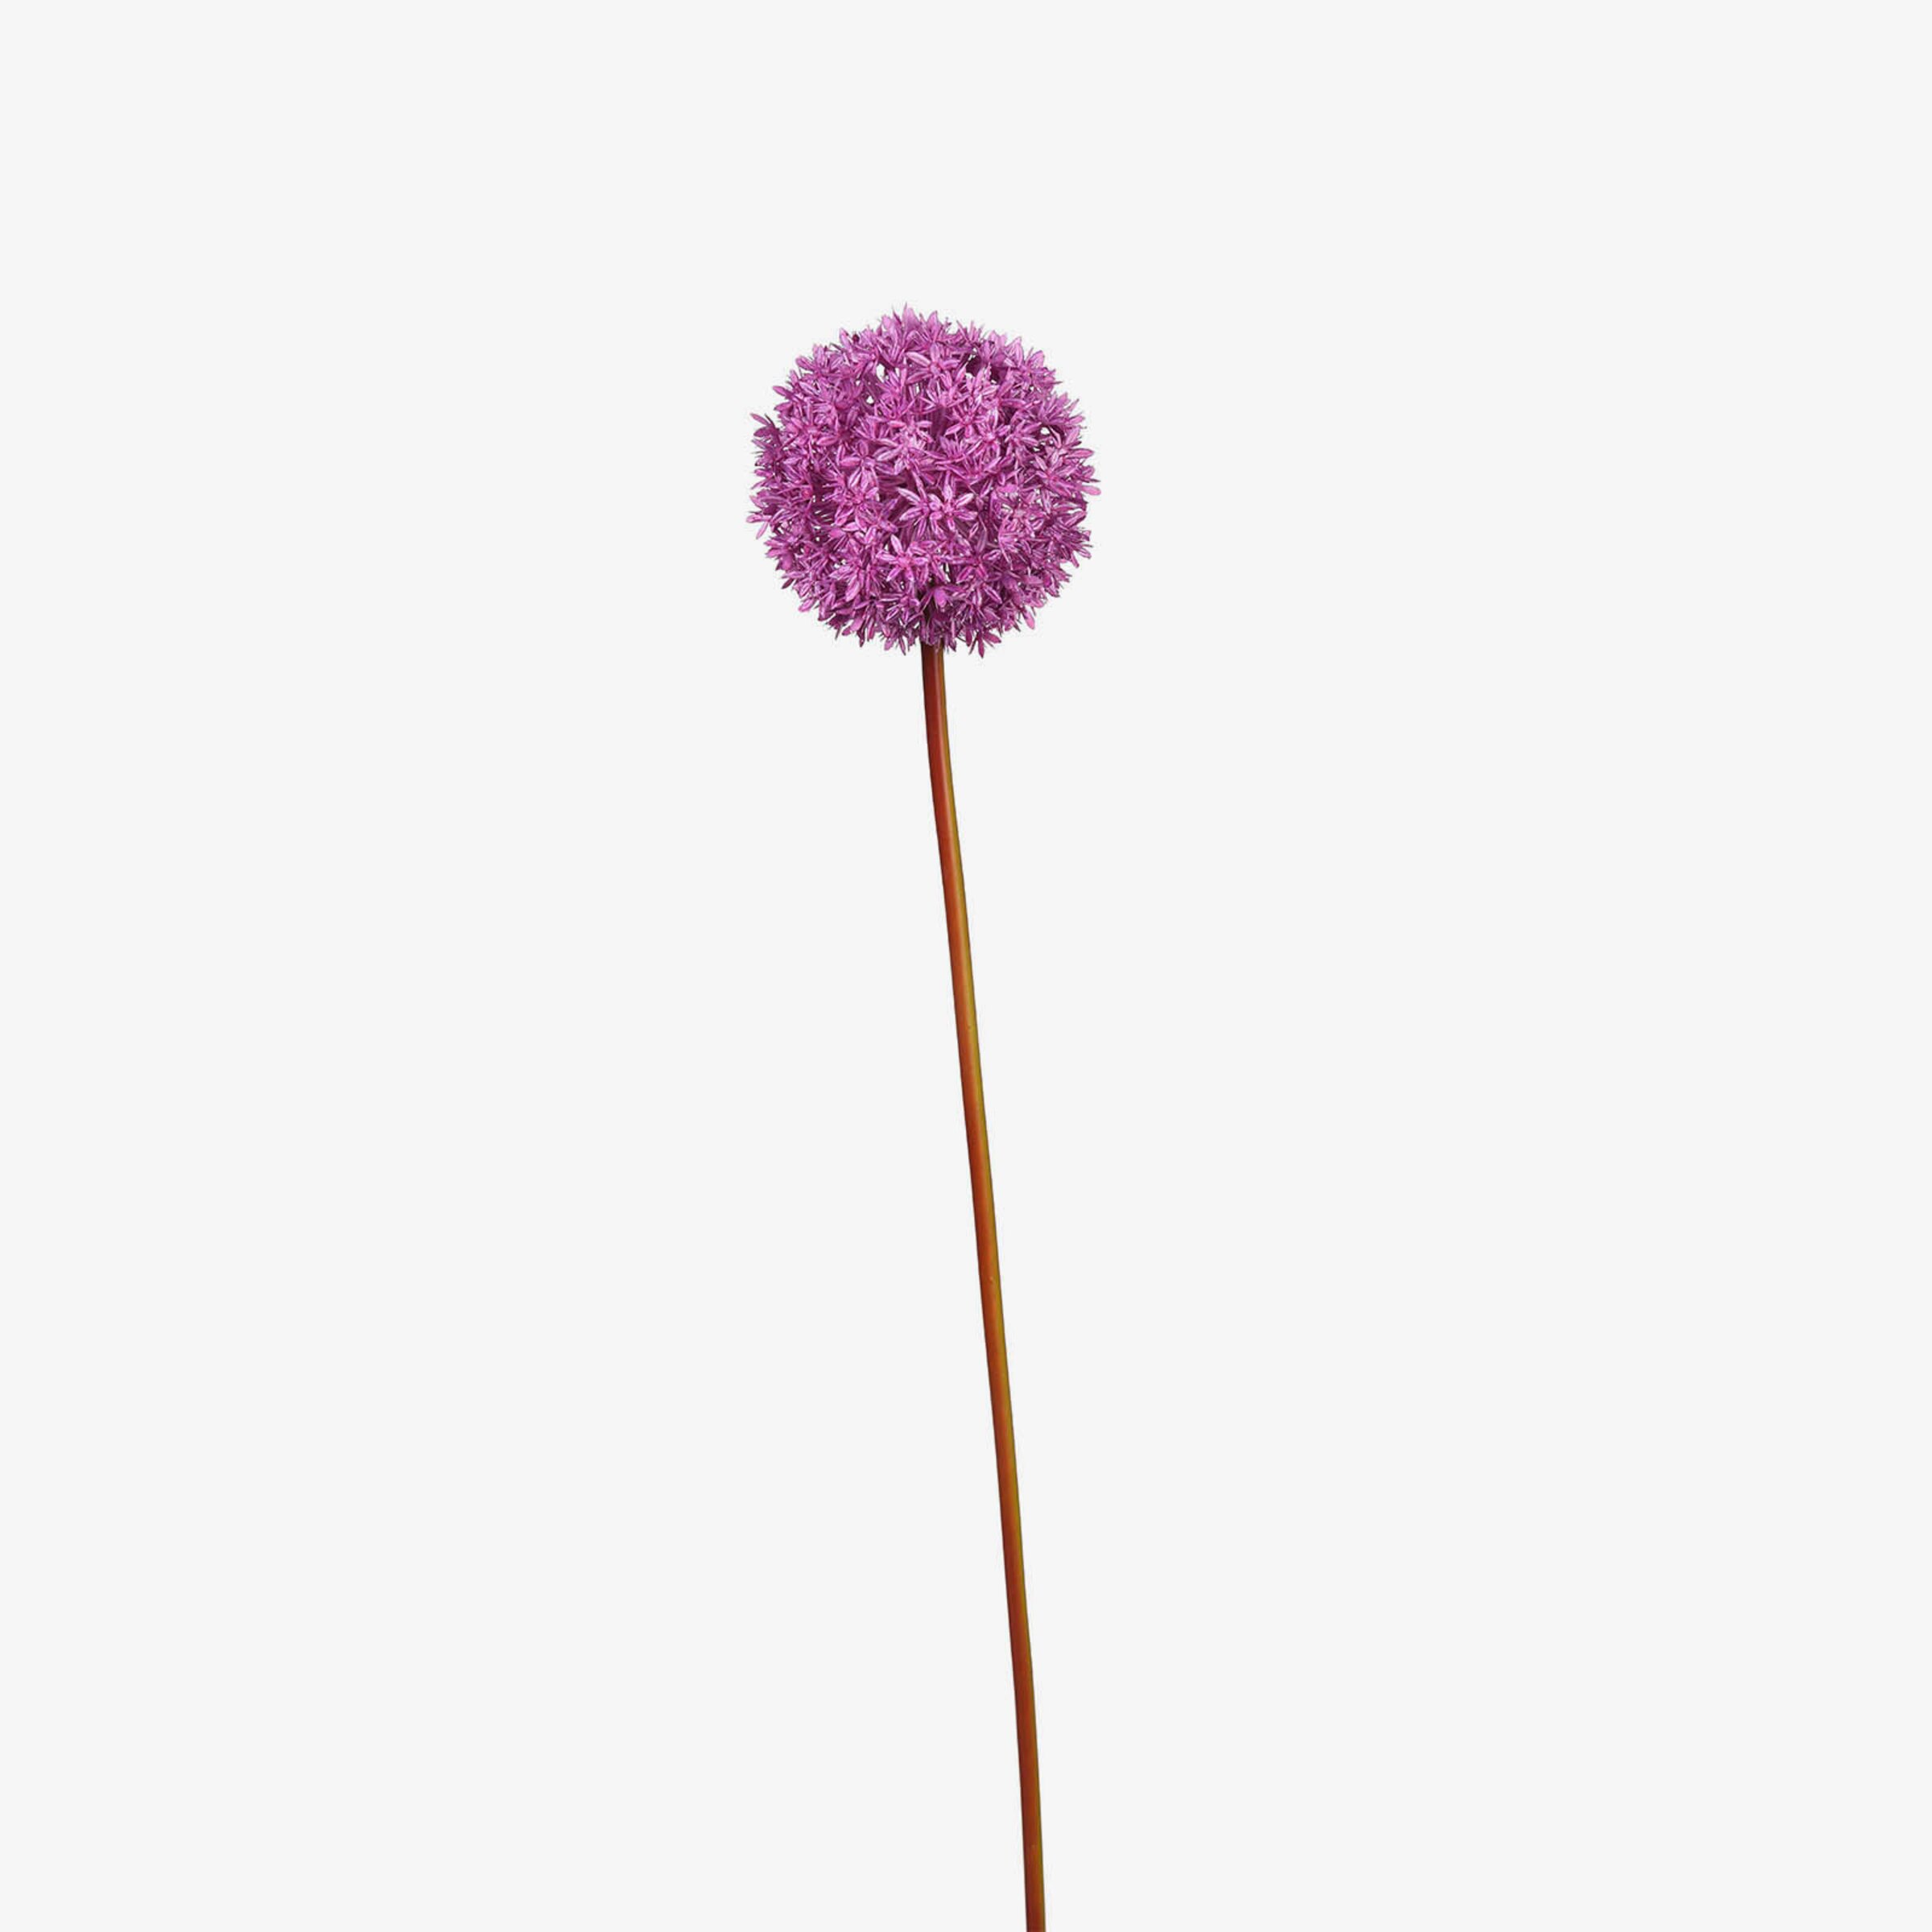 Kunst-Stielblume Allium